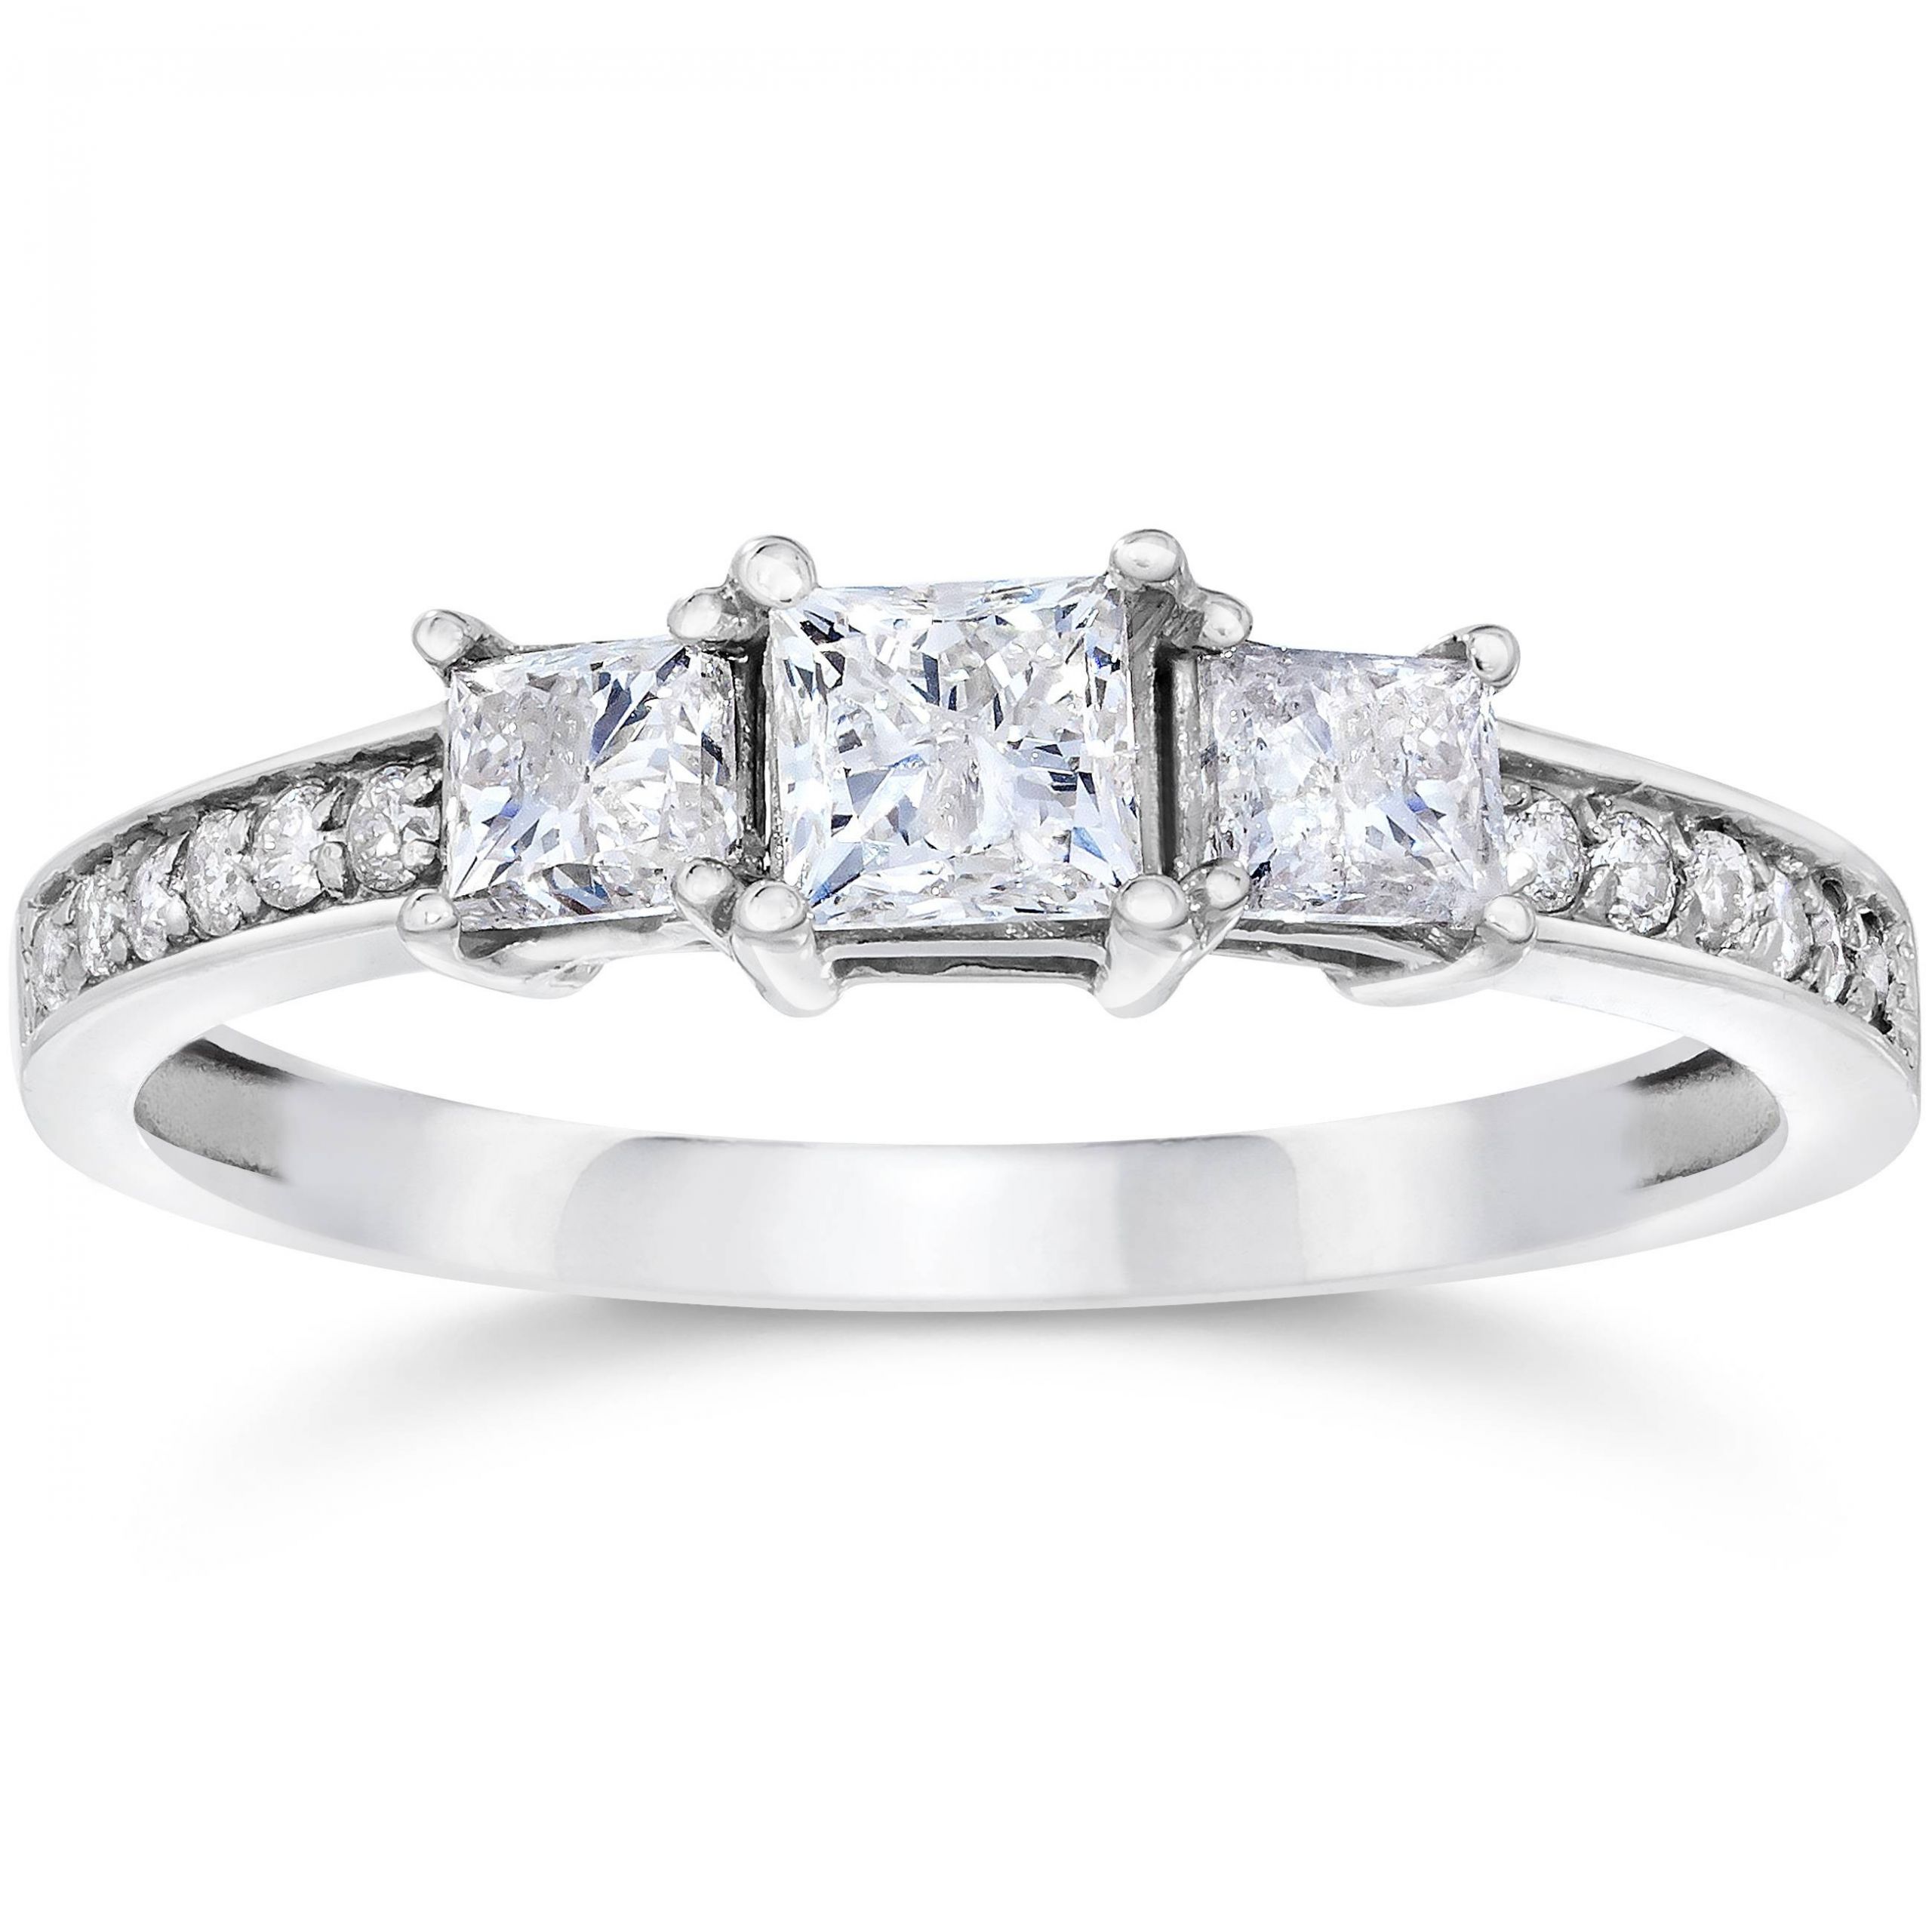 Princess Cut 3 Stone Engagement Rings
 1 2ct Three Stone Princess Cut Diamond Engagement Ring 14K